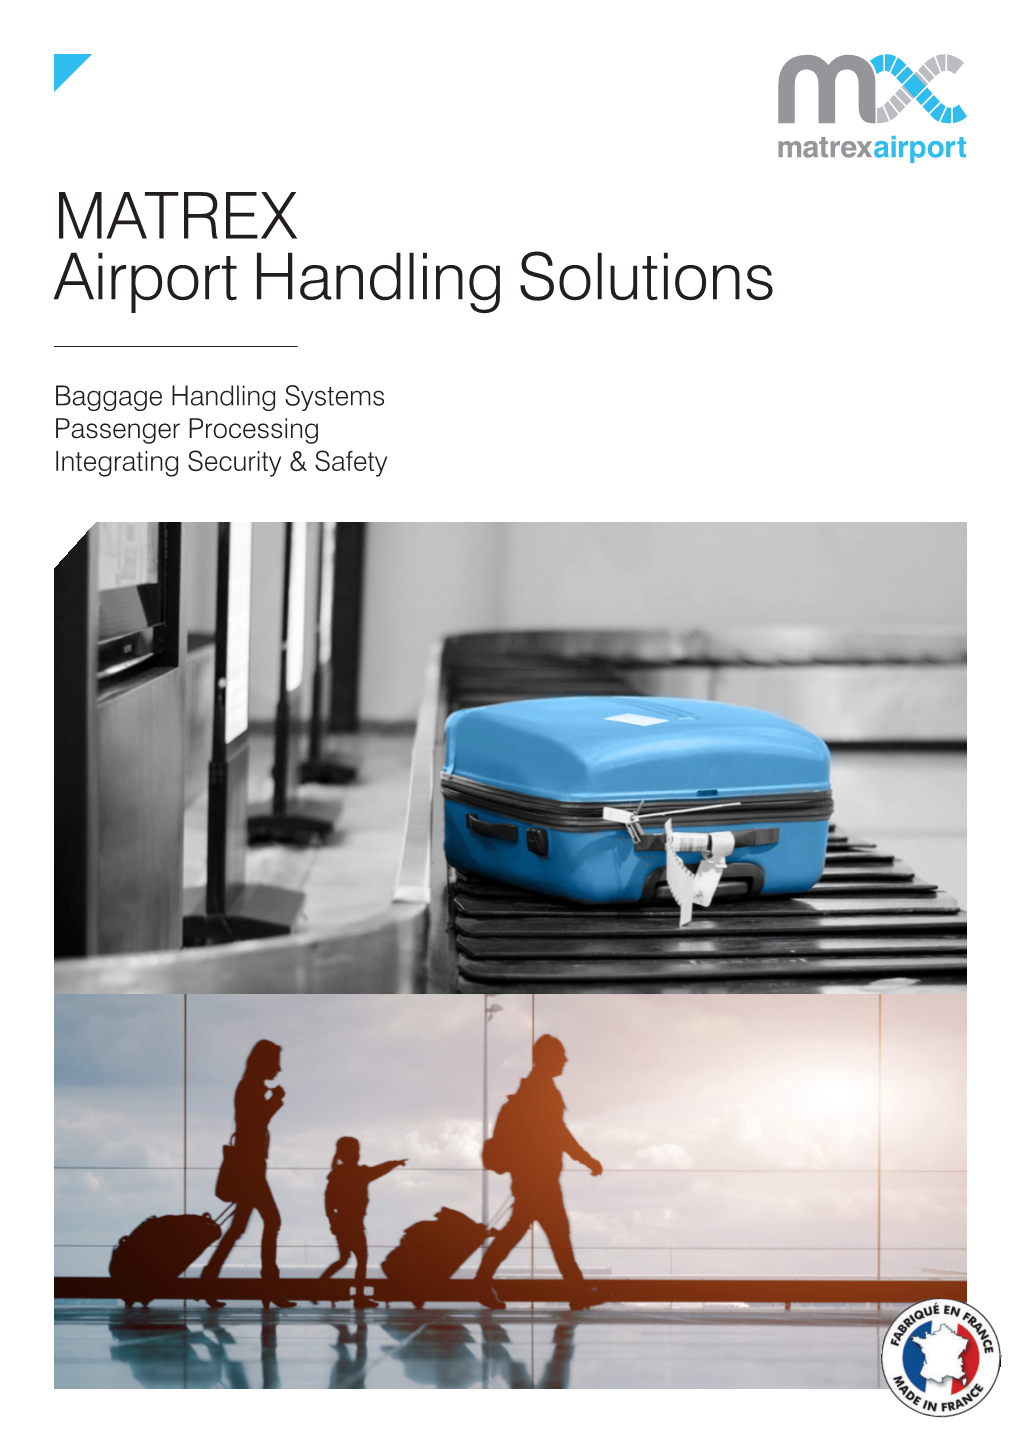 MATREX Airport Handling Solutions